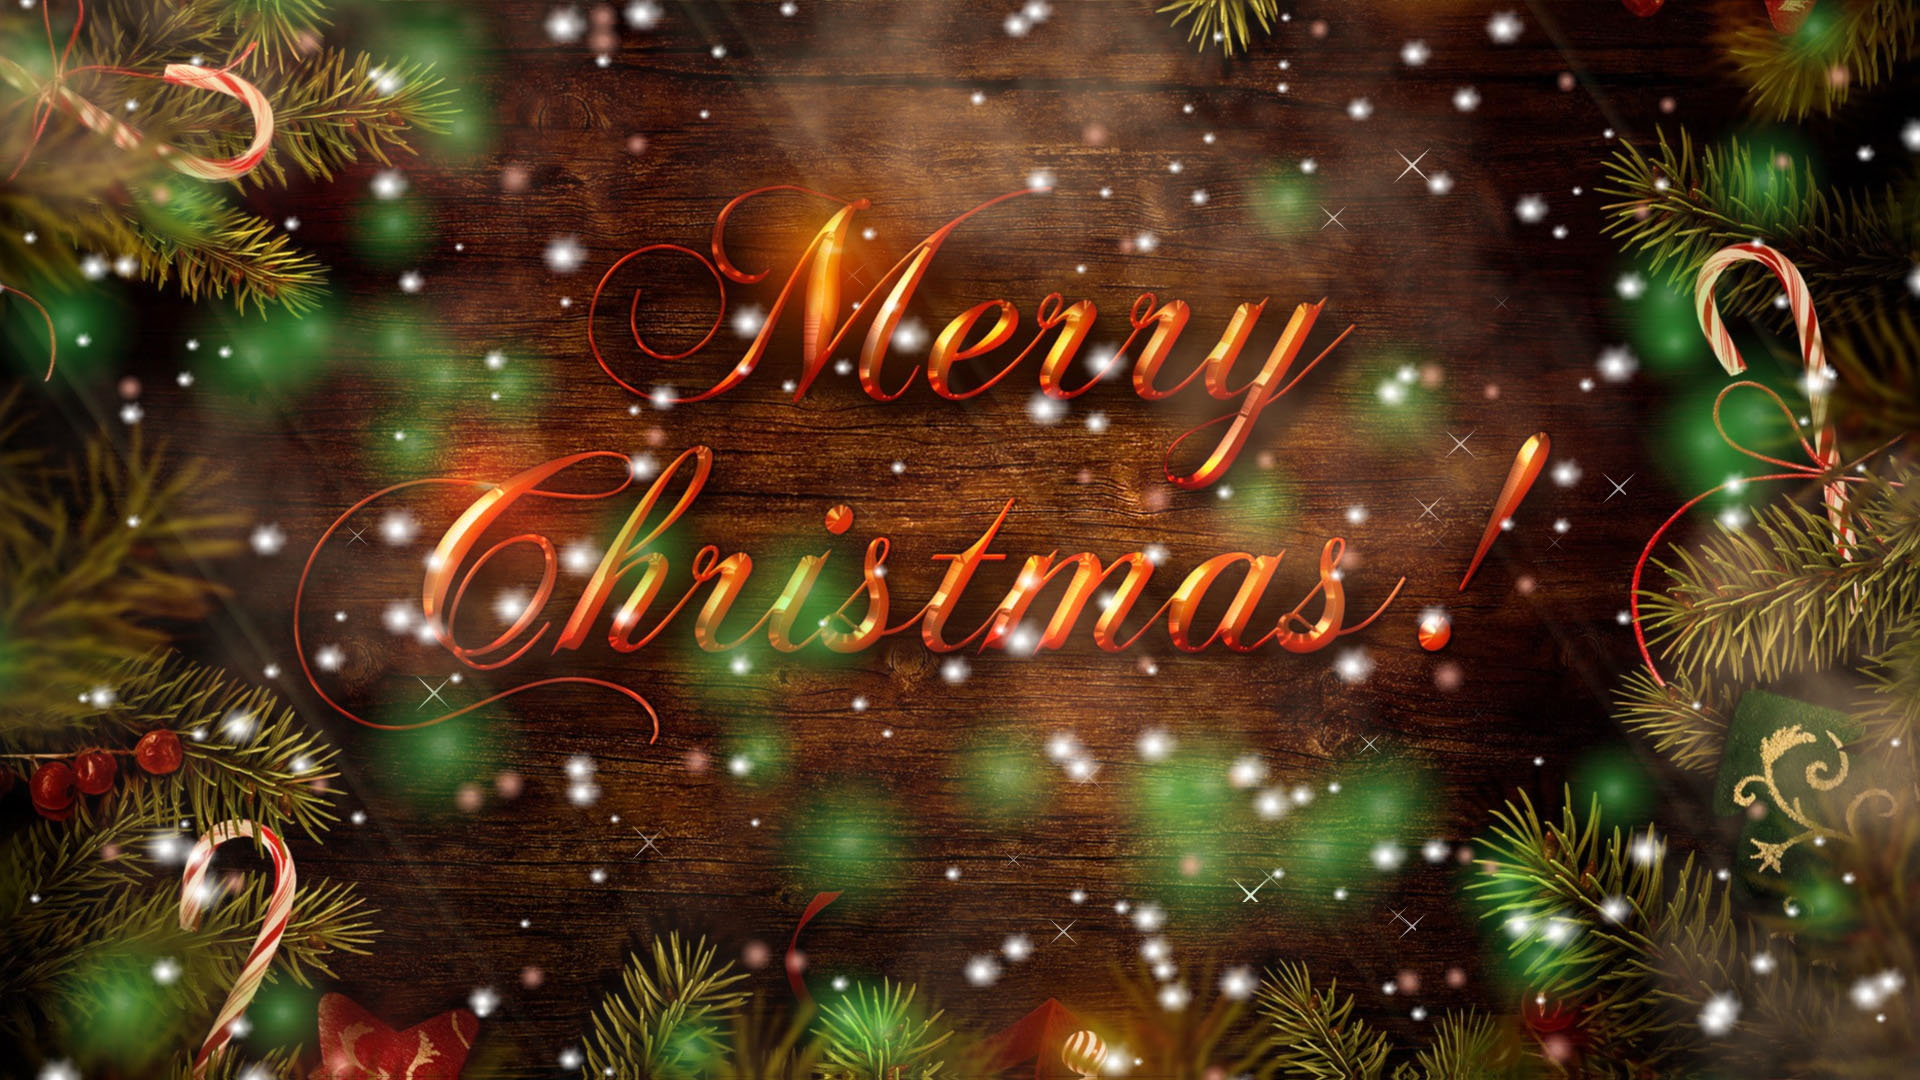 Christmas Screensaver Download for Windows 10 - Festive Christmas ...